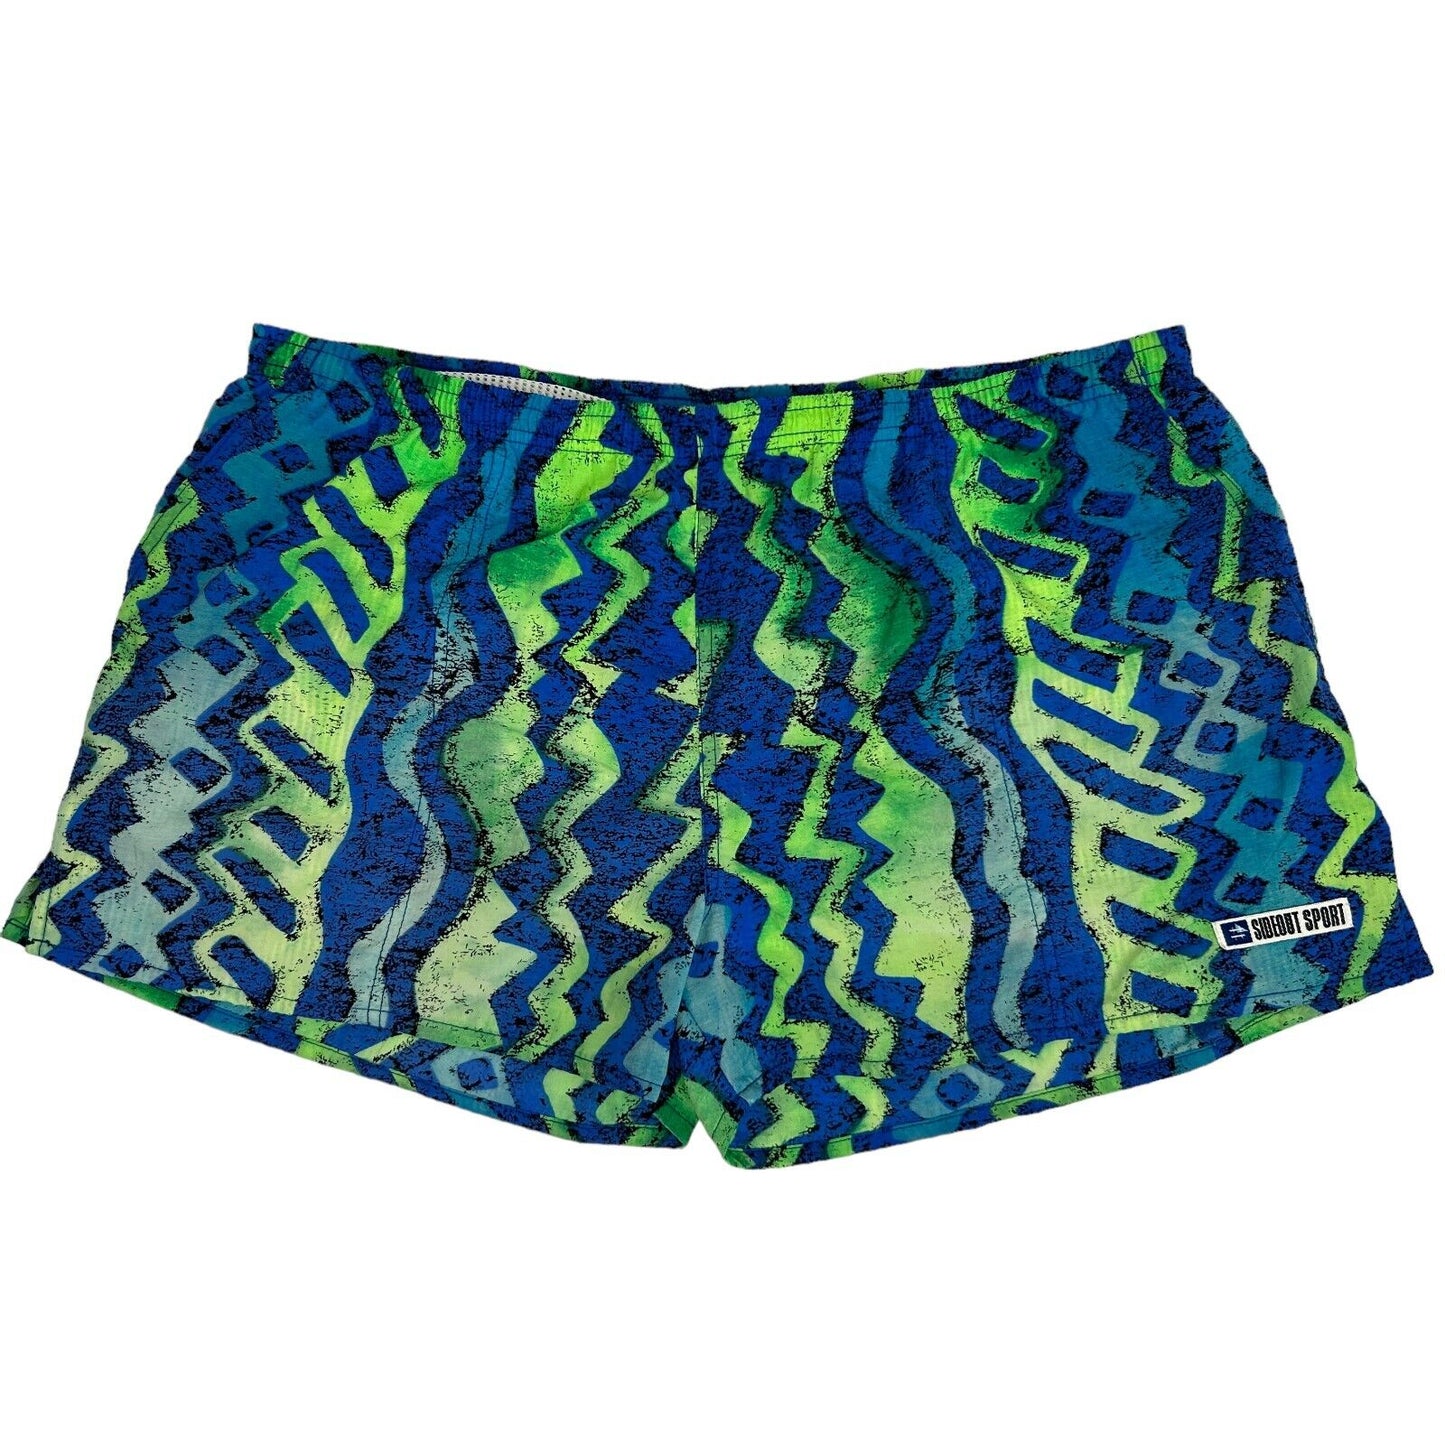 Sideline Sports Vintage 90s Swim Trunks Shorts Blue Green Lined Drawstring 2XL